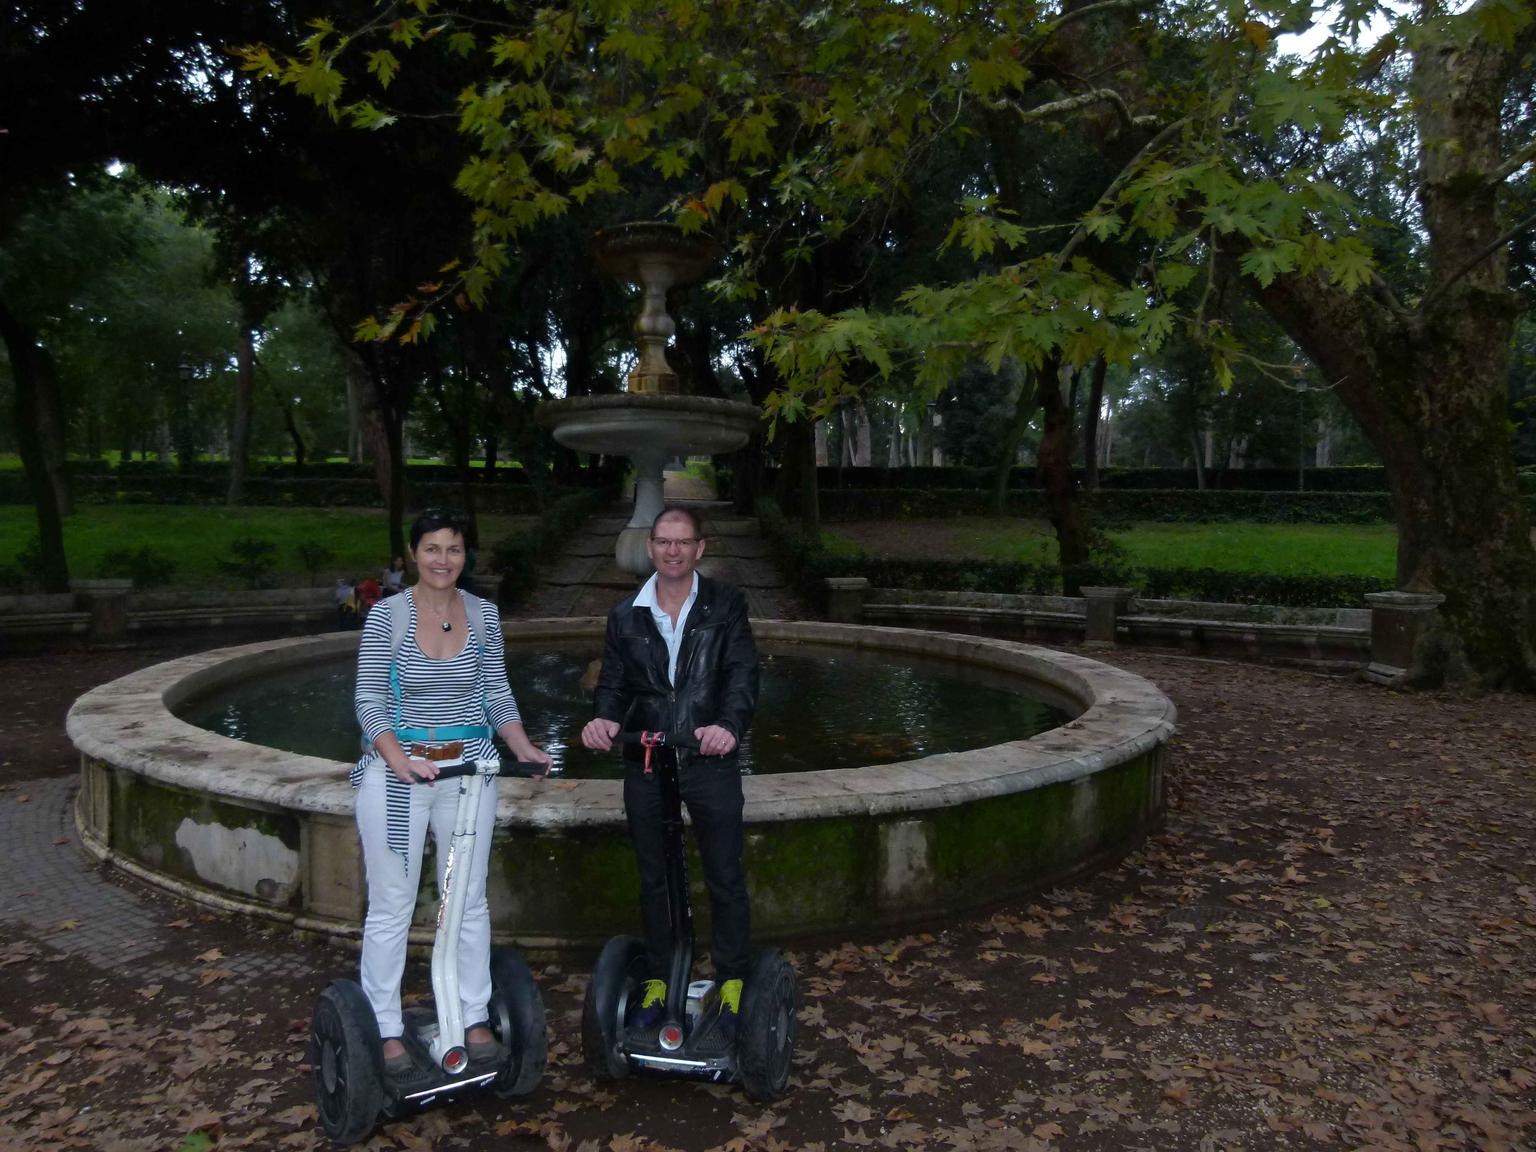 Marie et Didier, Segway villa Borghese